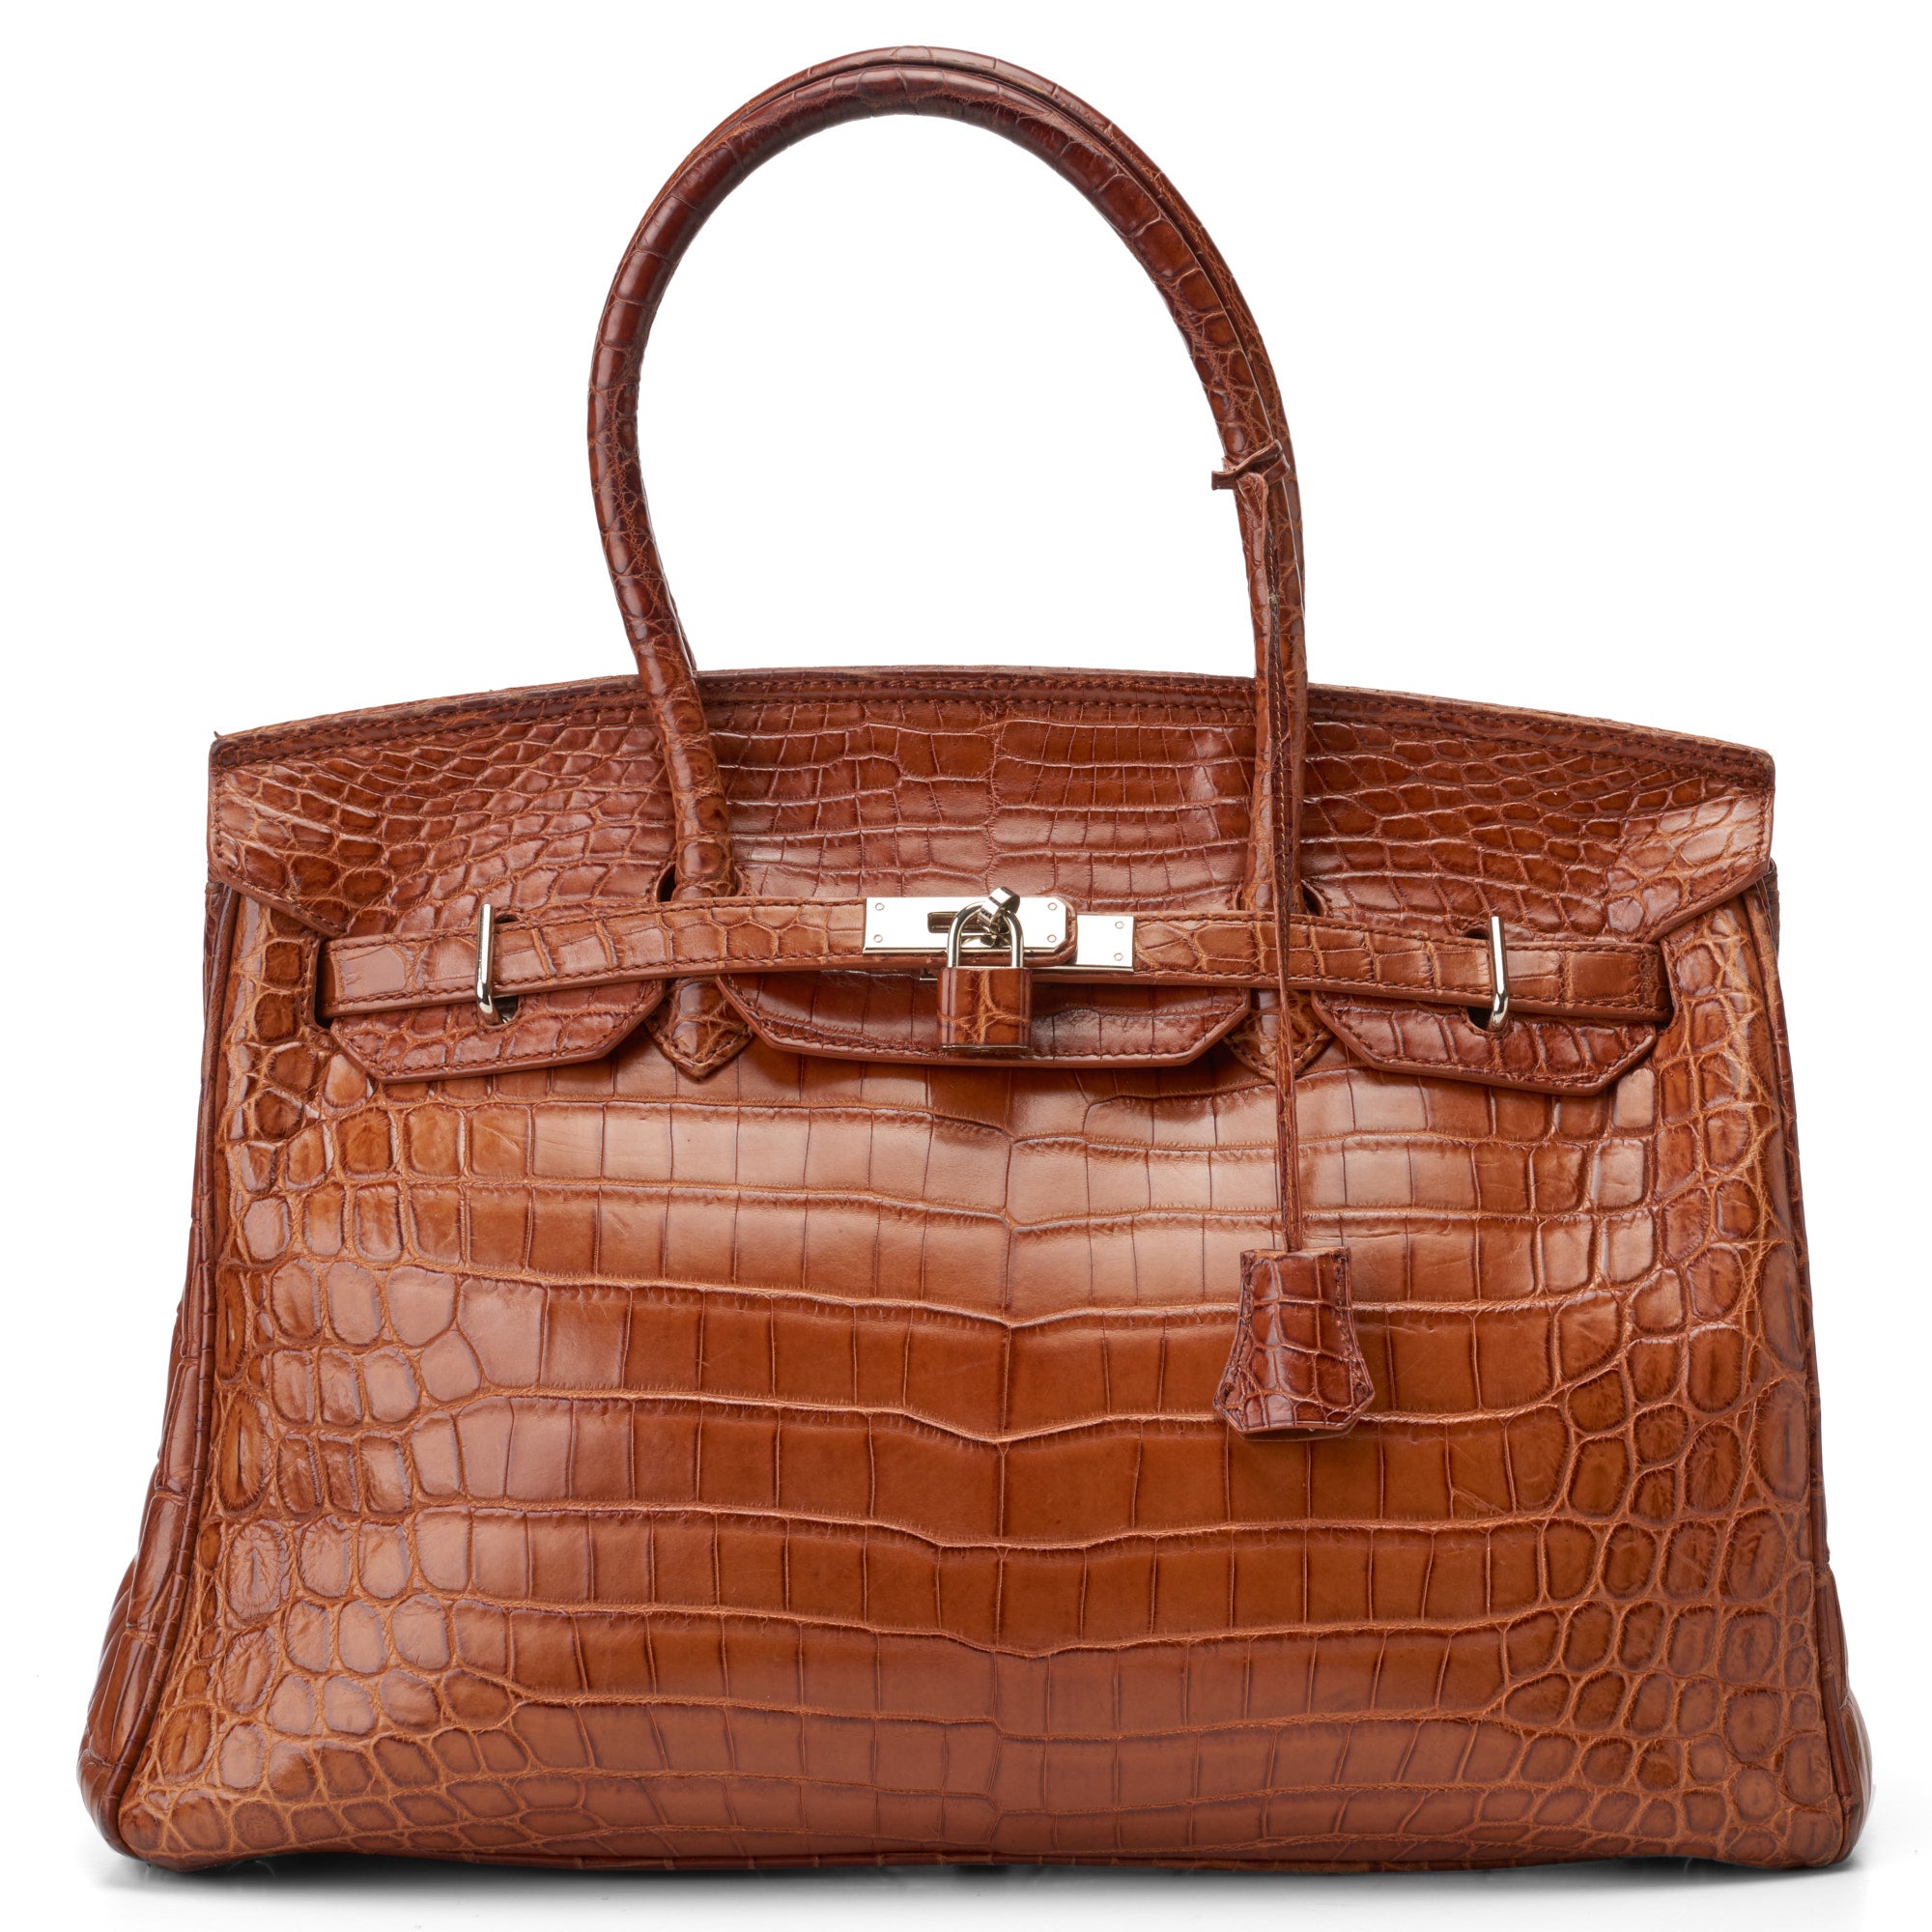 Hermes birkin crocodile womens bag